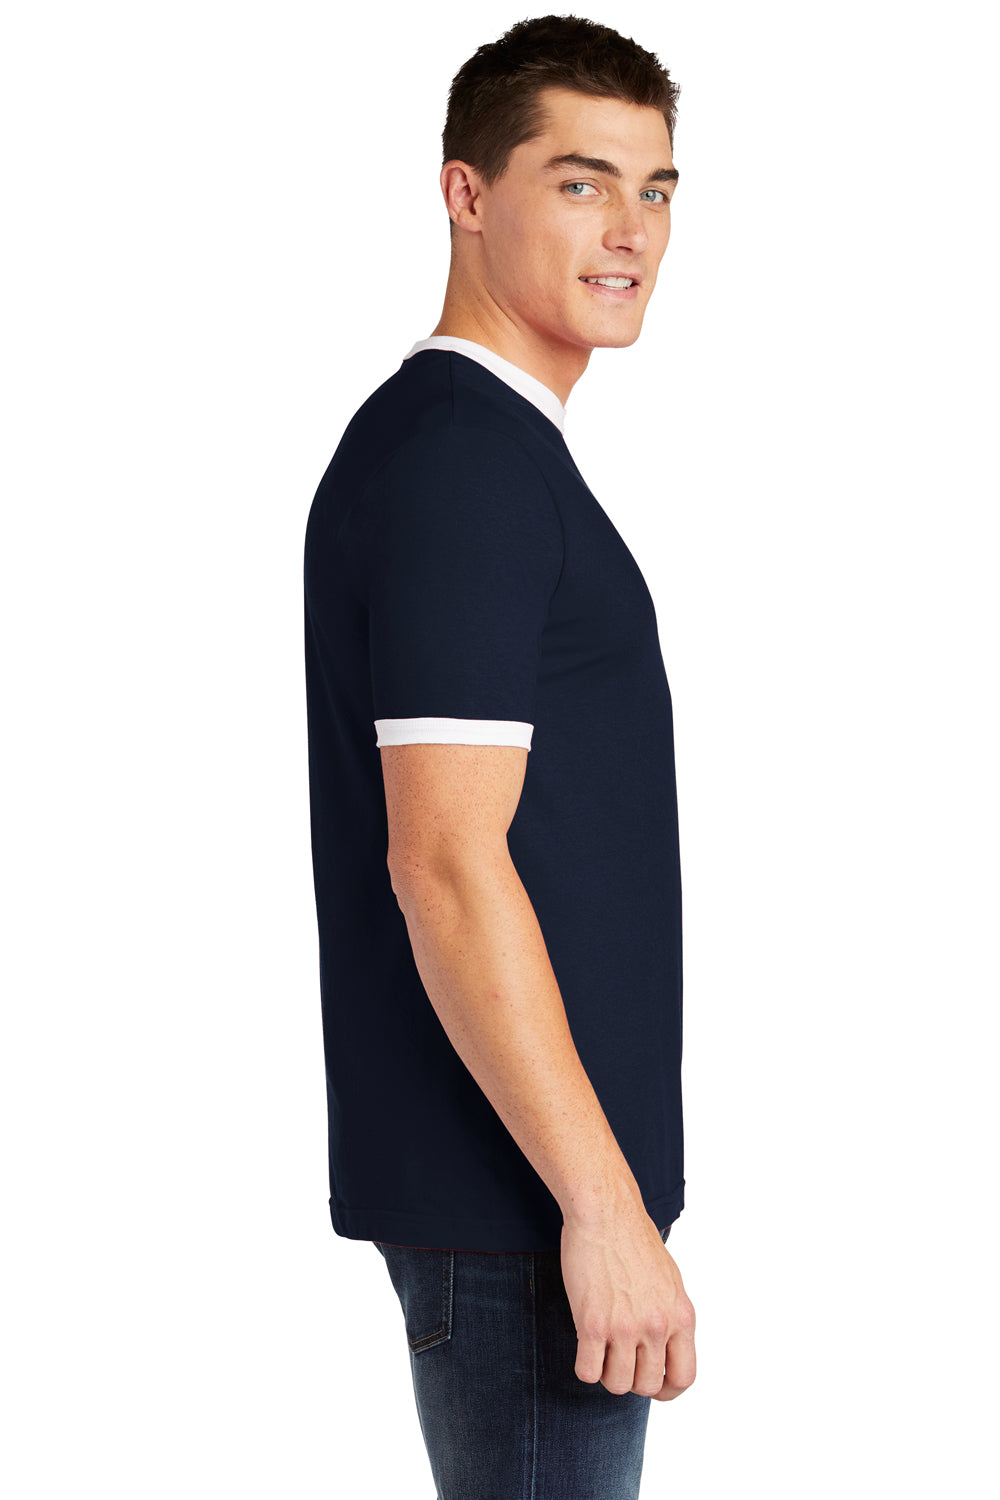 American Apparel 2410W Mens Fine Jersey Short Sleeve Crewneck T-Shirt Navy Blue Side